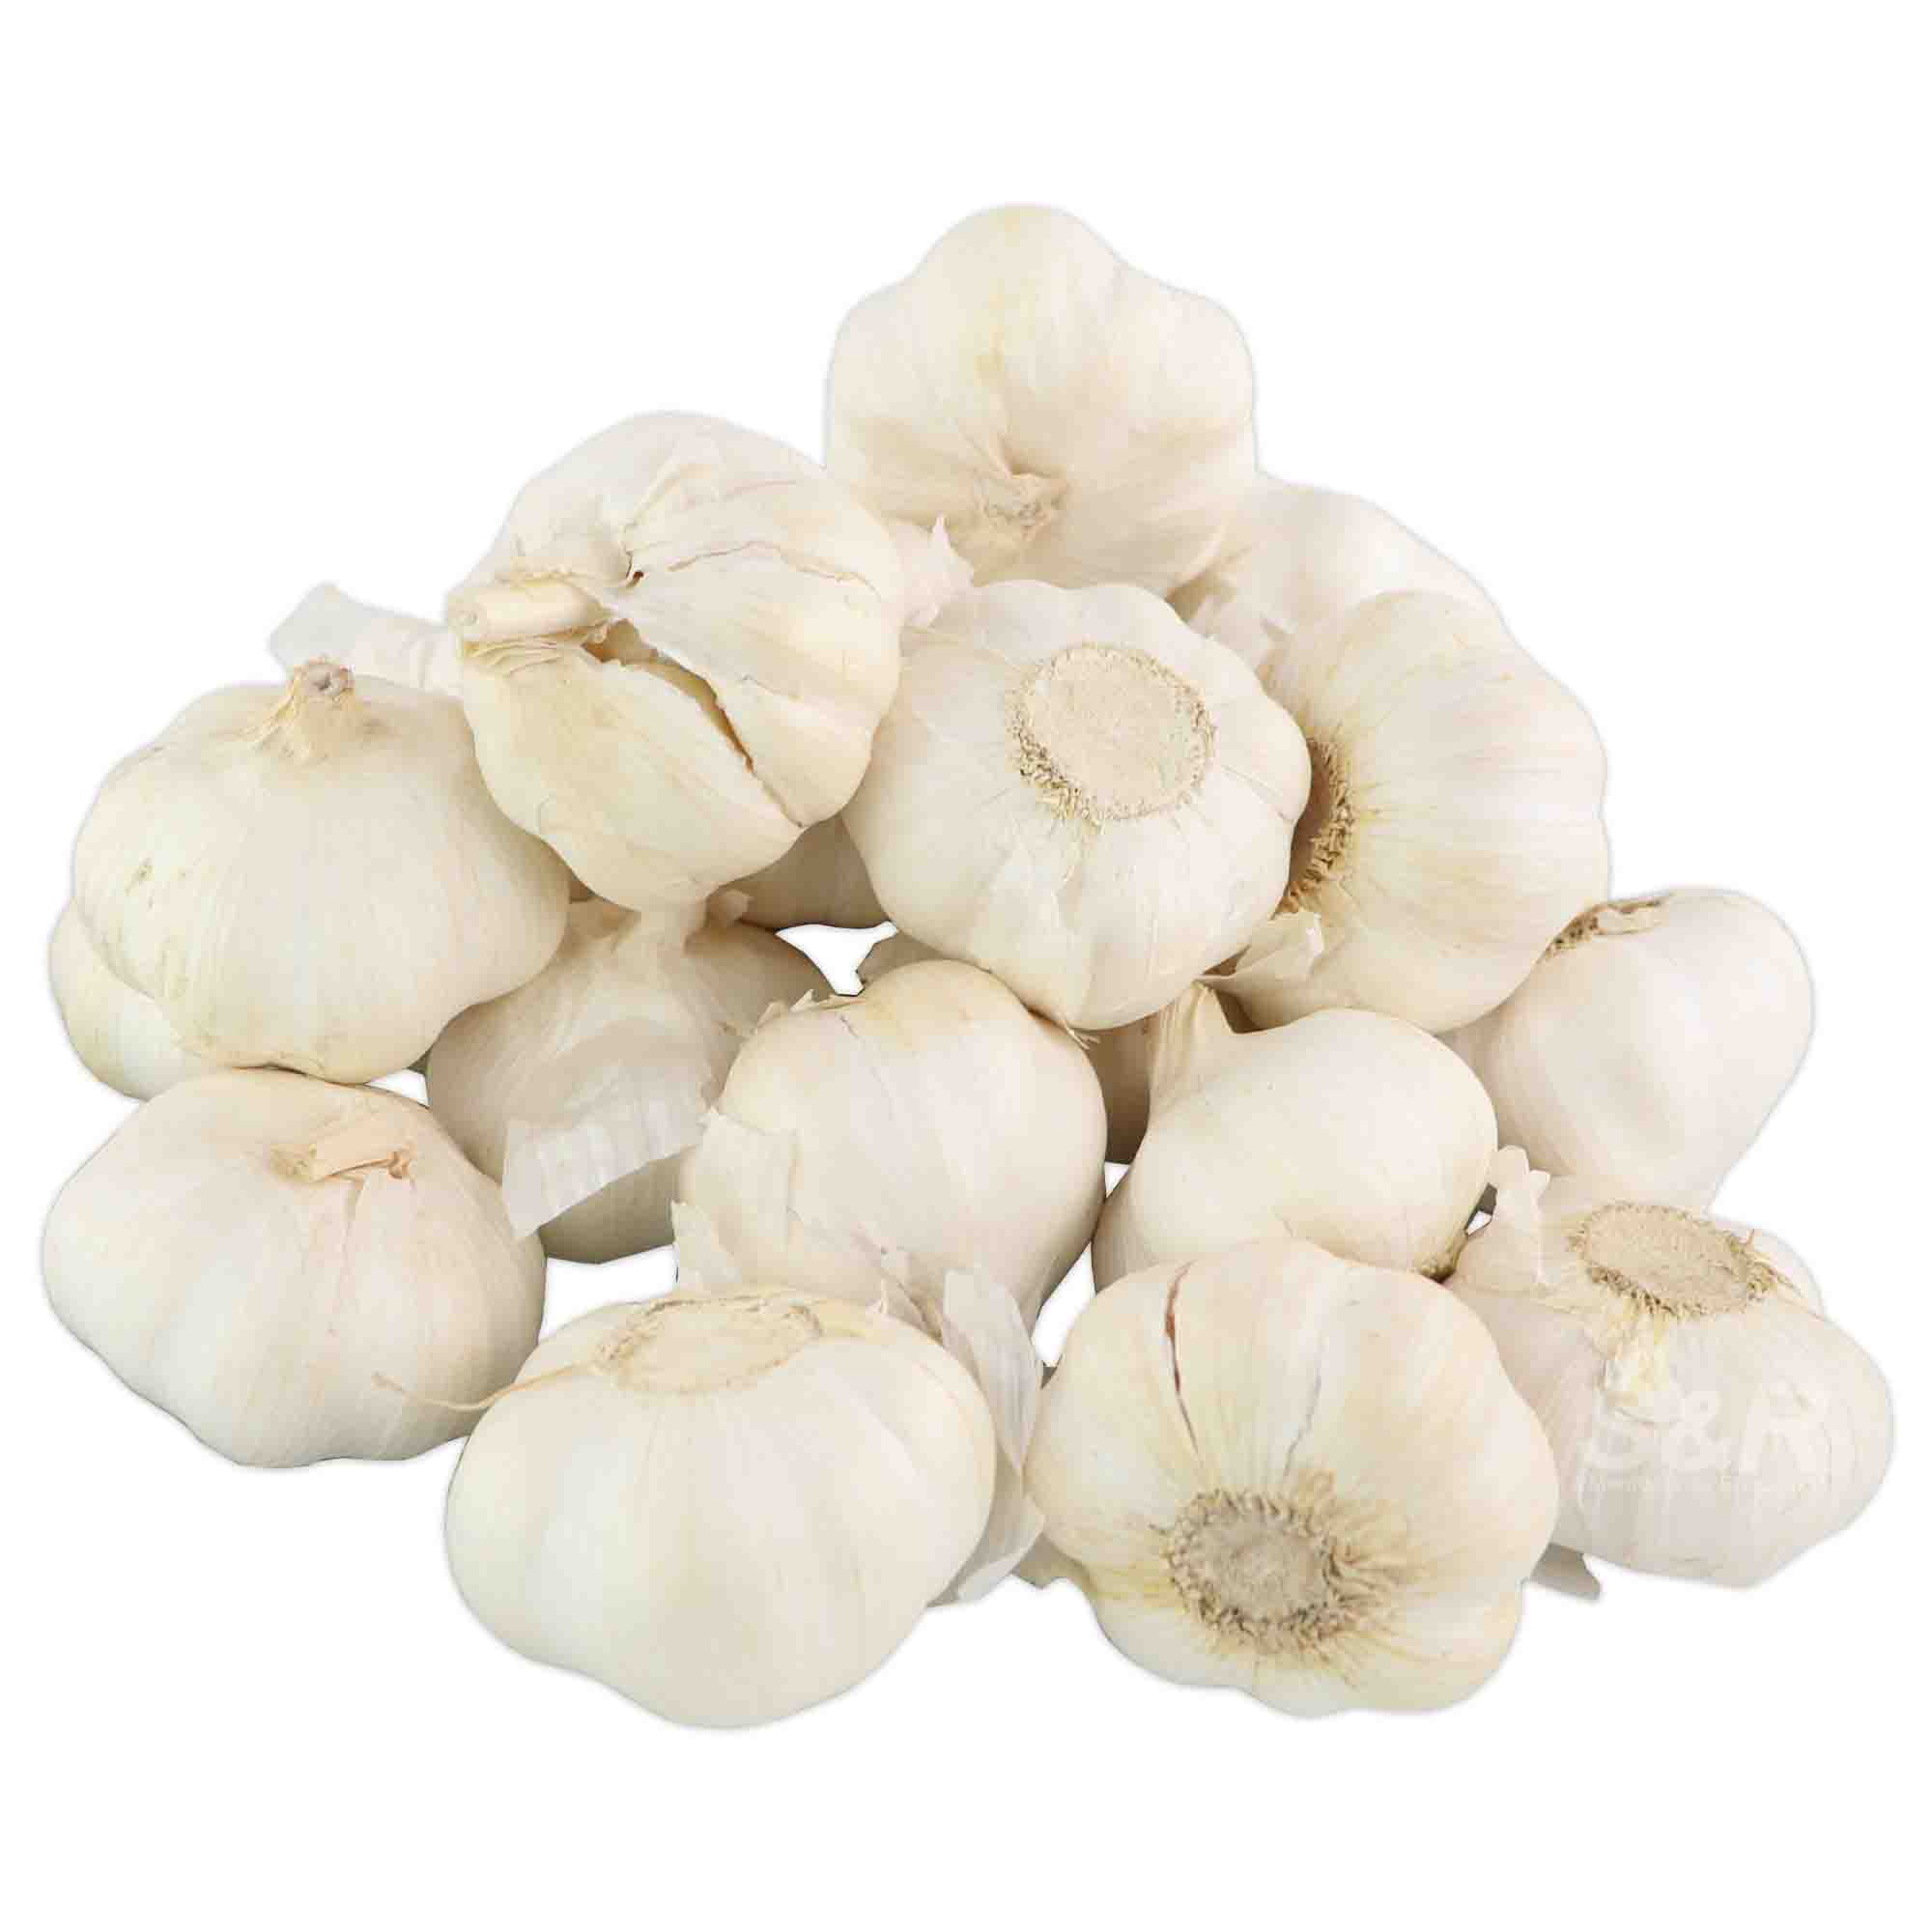 S&R Whole Garlic approx. 2kg